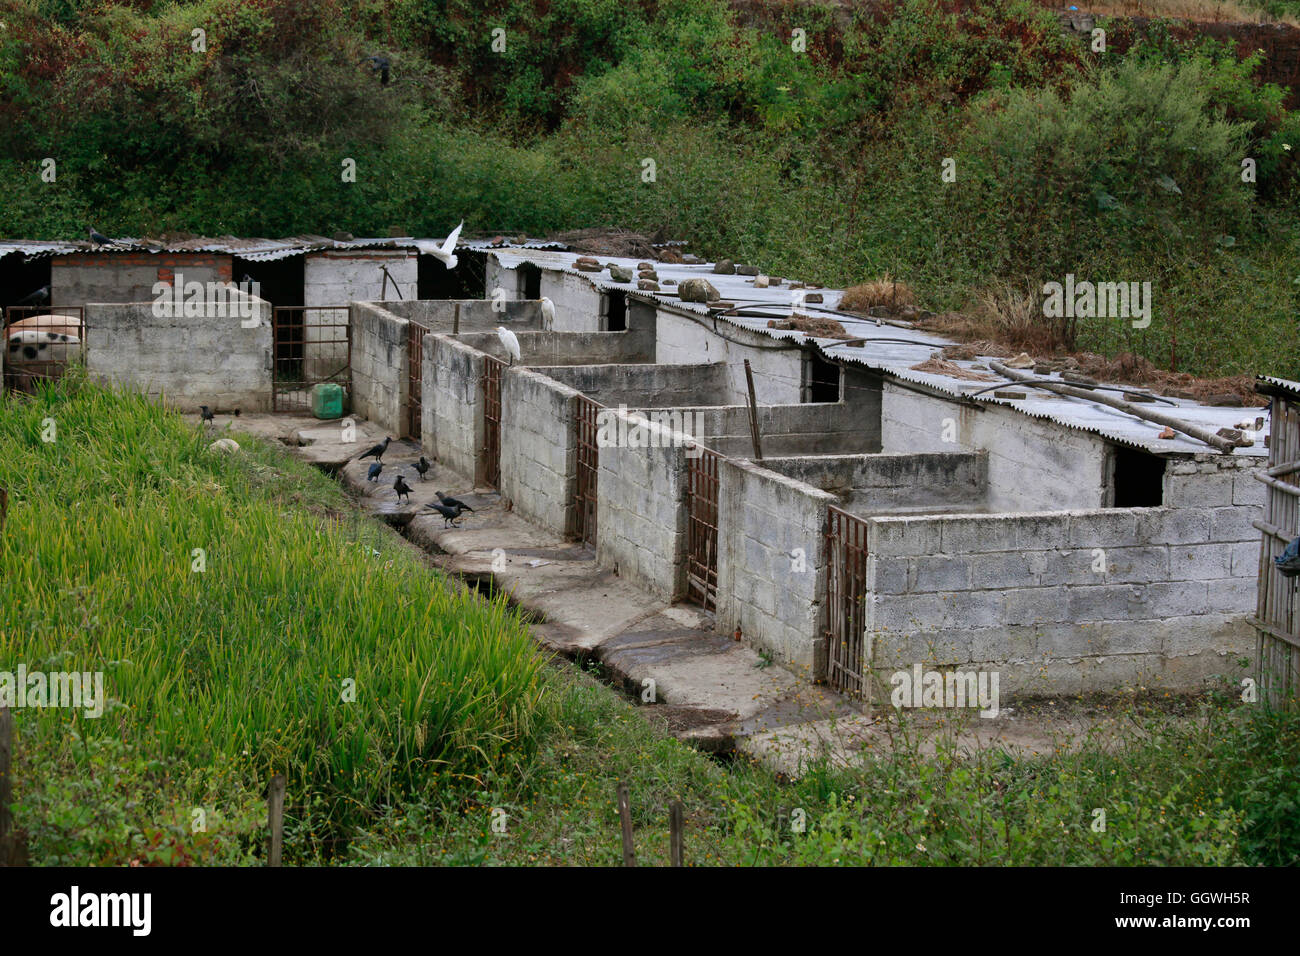 Pig stalls funded by wehelpnepal.org through a microcredit loan - KATHMANDU, NEPAL Stock Photo